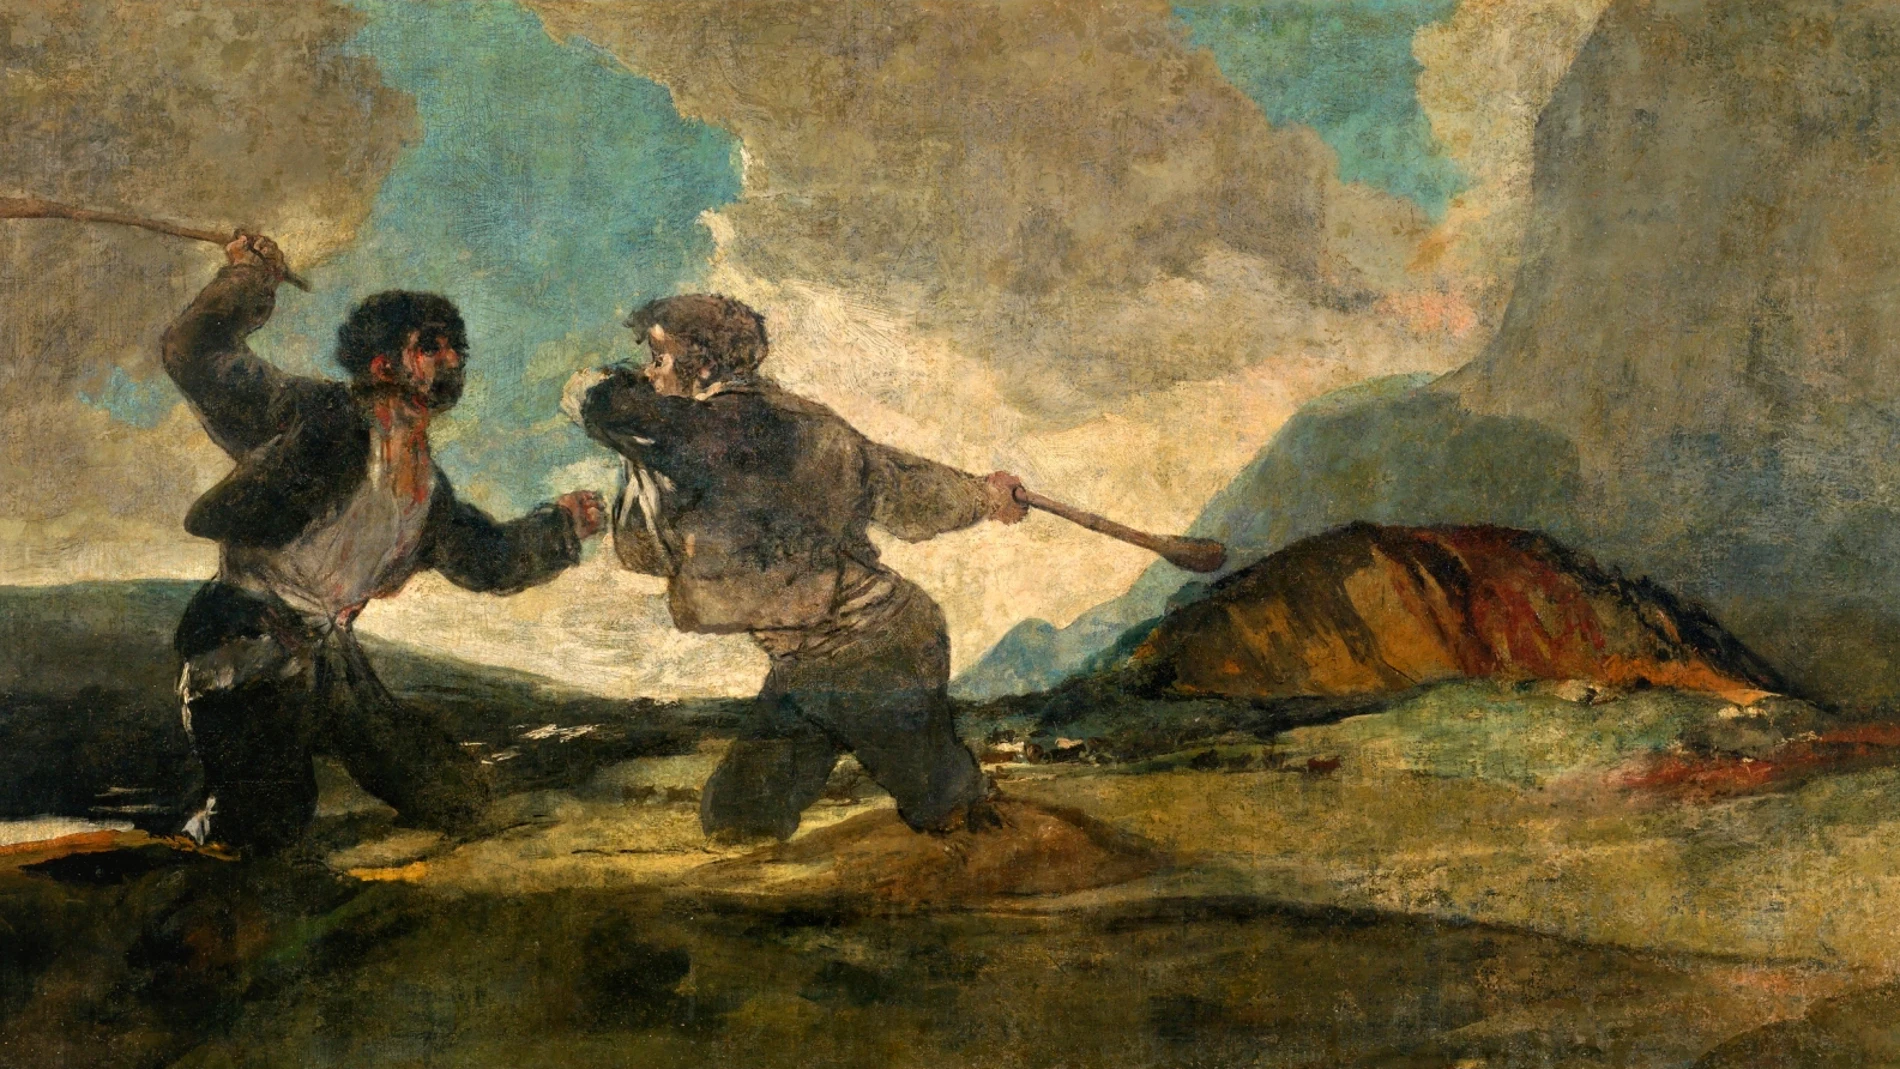 «Duelo a garrotazos» (123 x 266) es un óleo sobre revoco pintado por Francisco de Goya hacia 1874